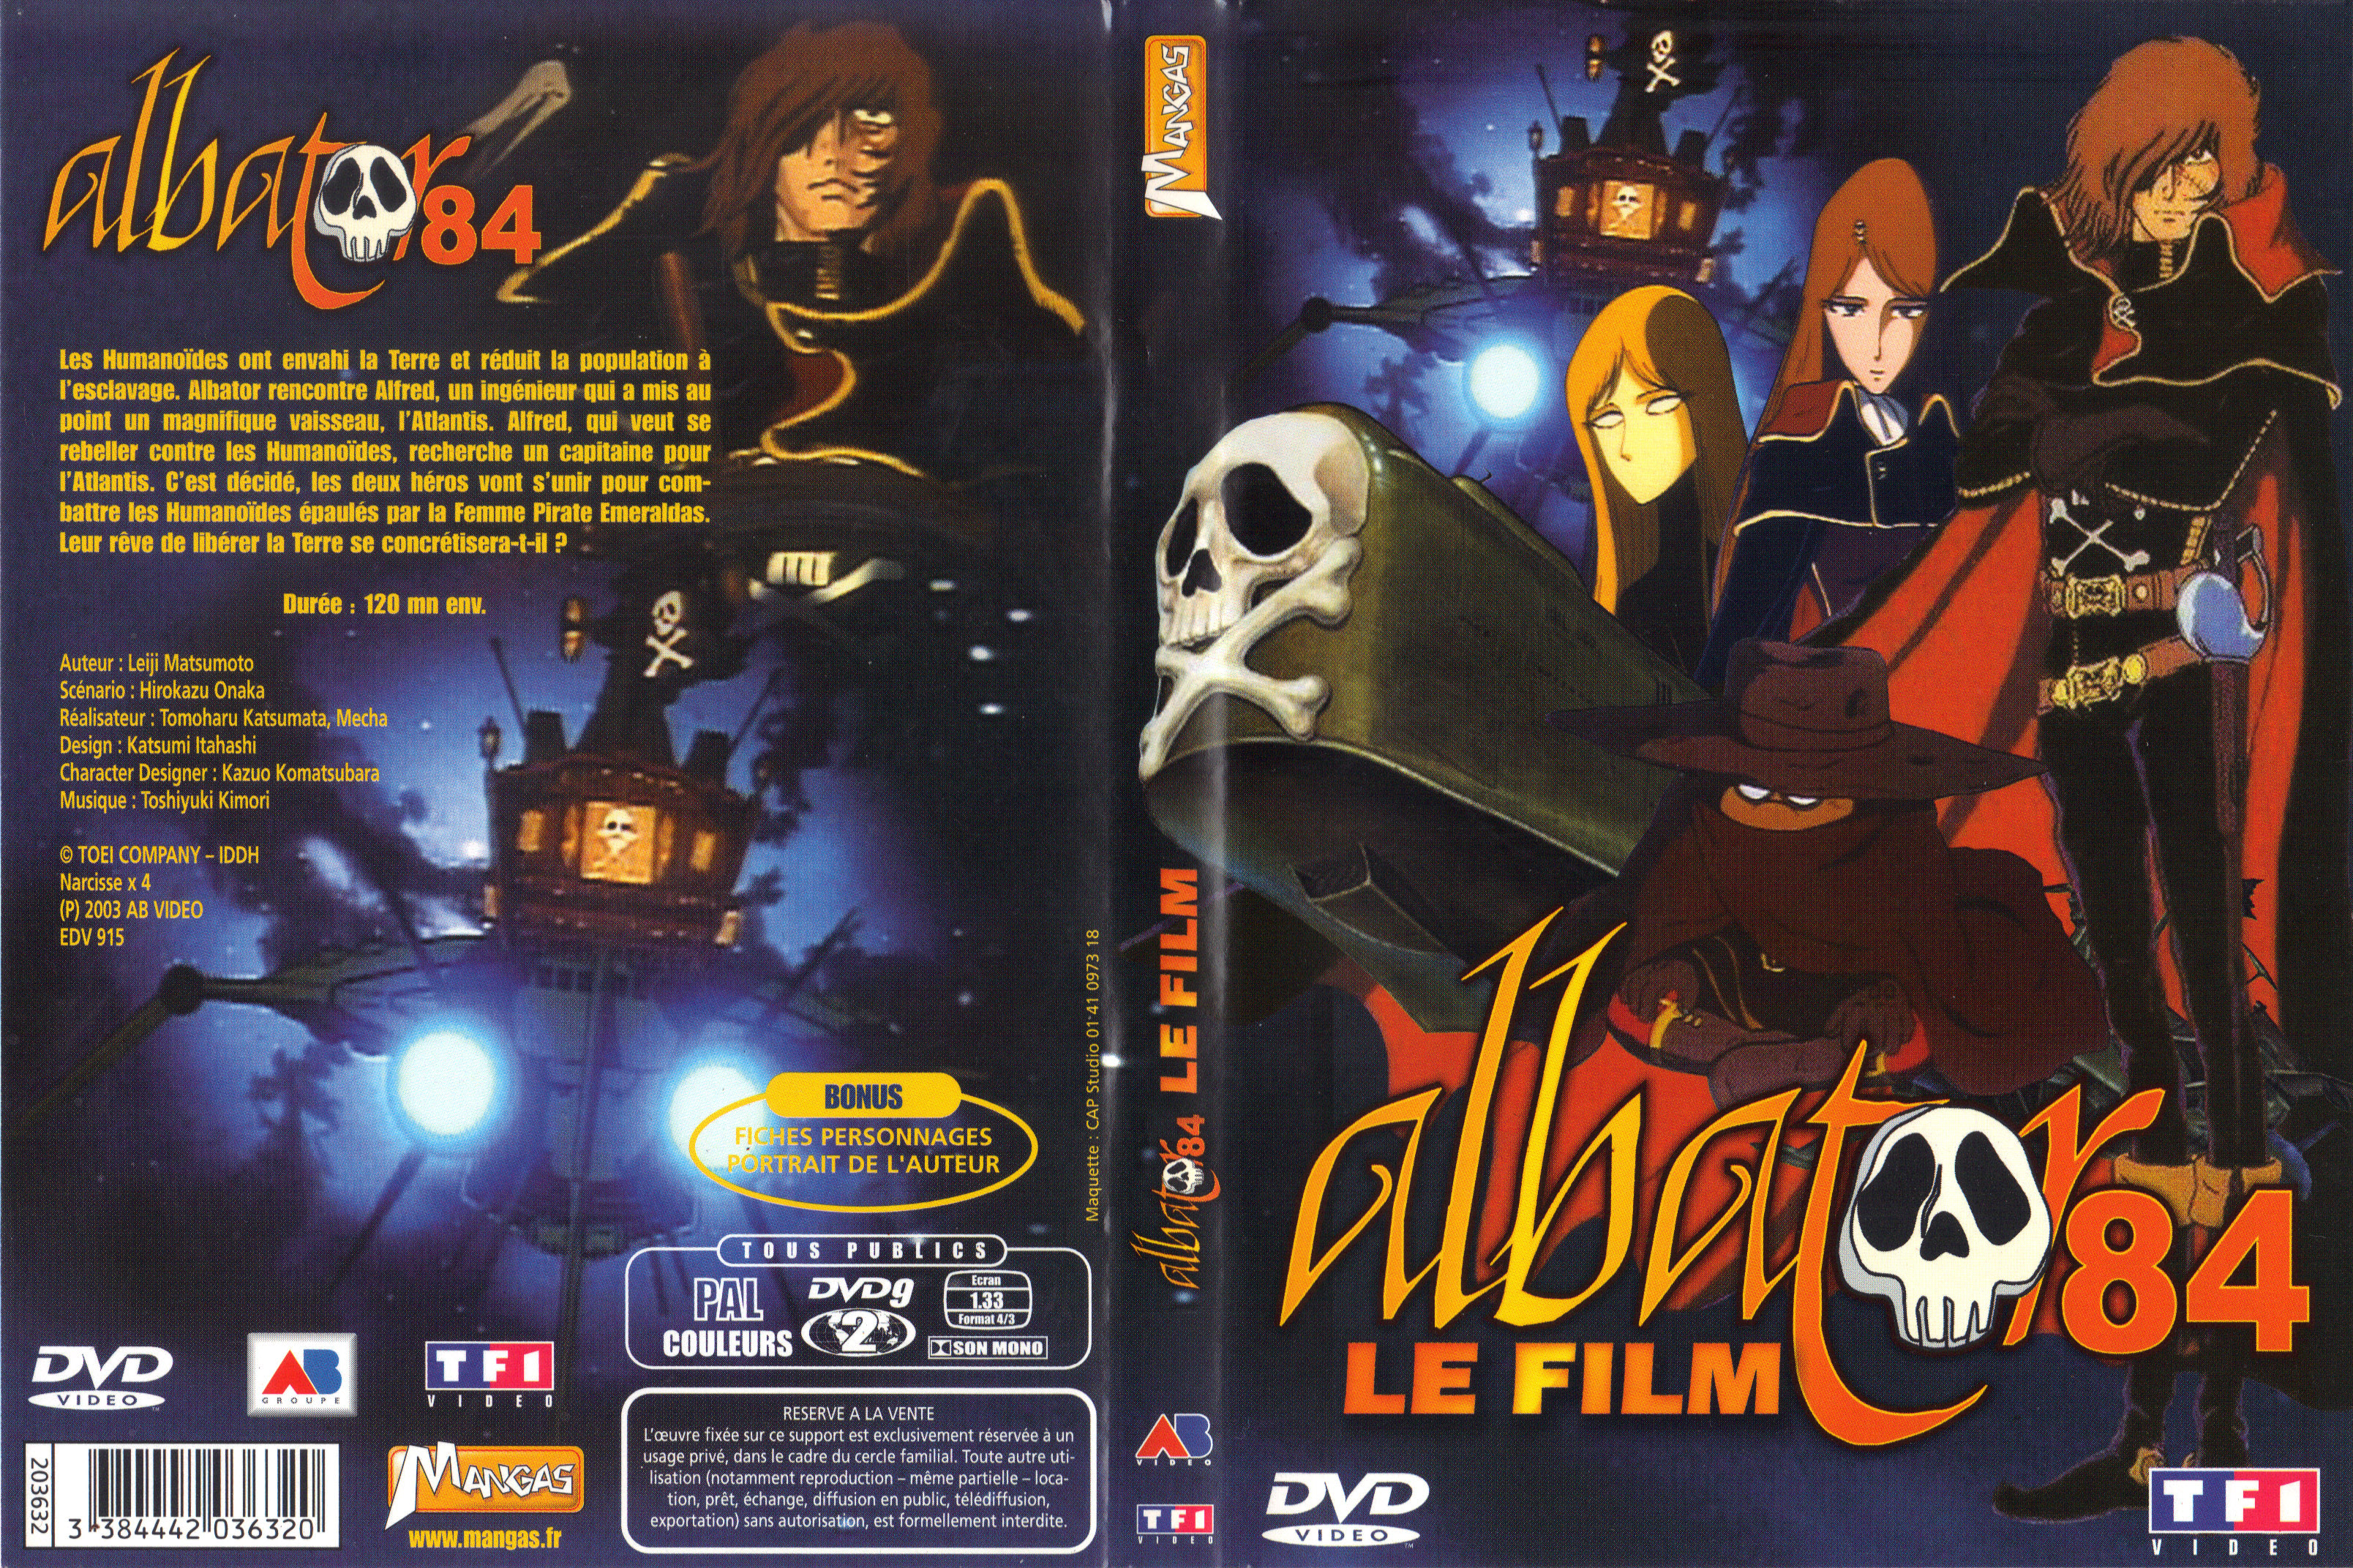 Jaquette DVD Albator 84 le film v2